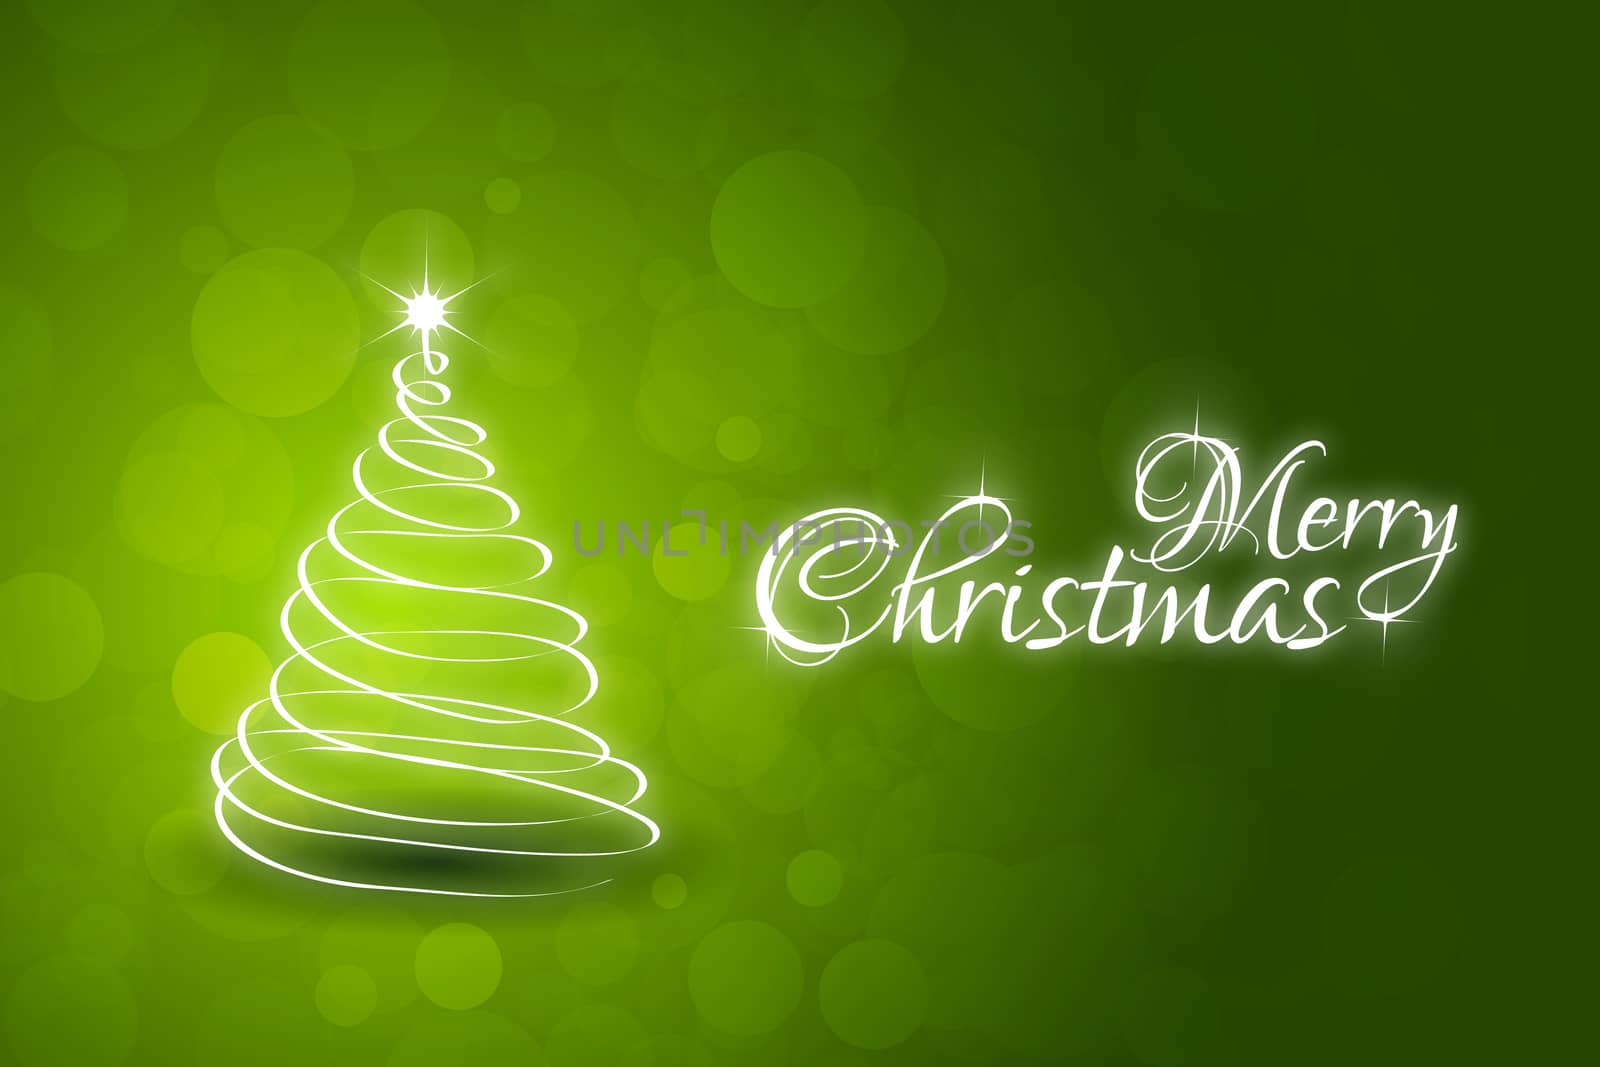 Green Christmas Card with abstract Christmas Tree